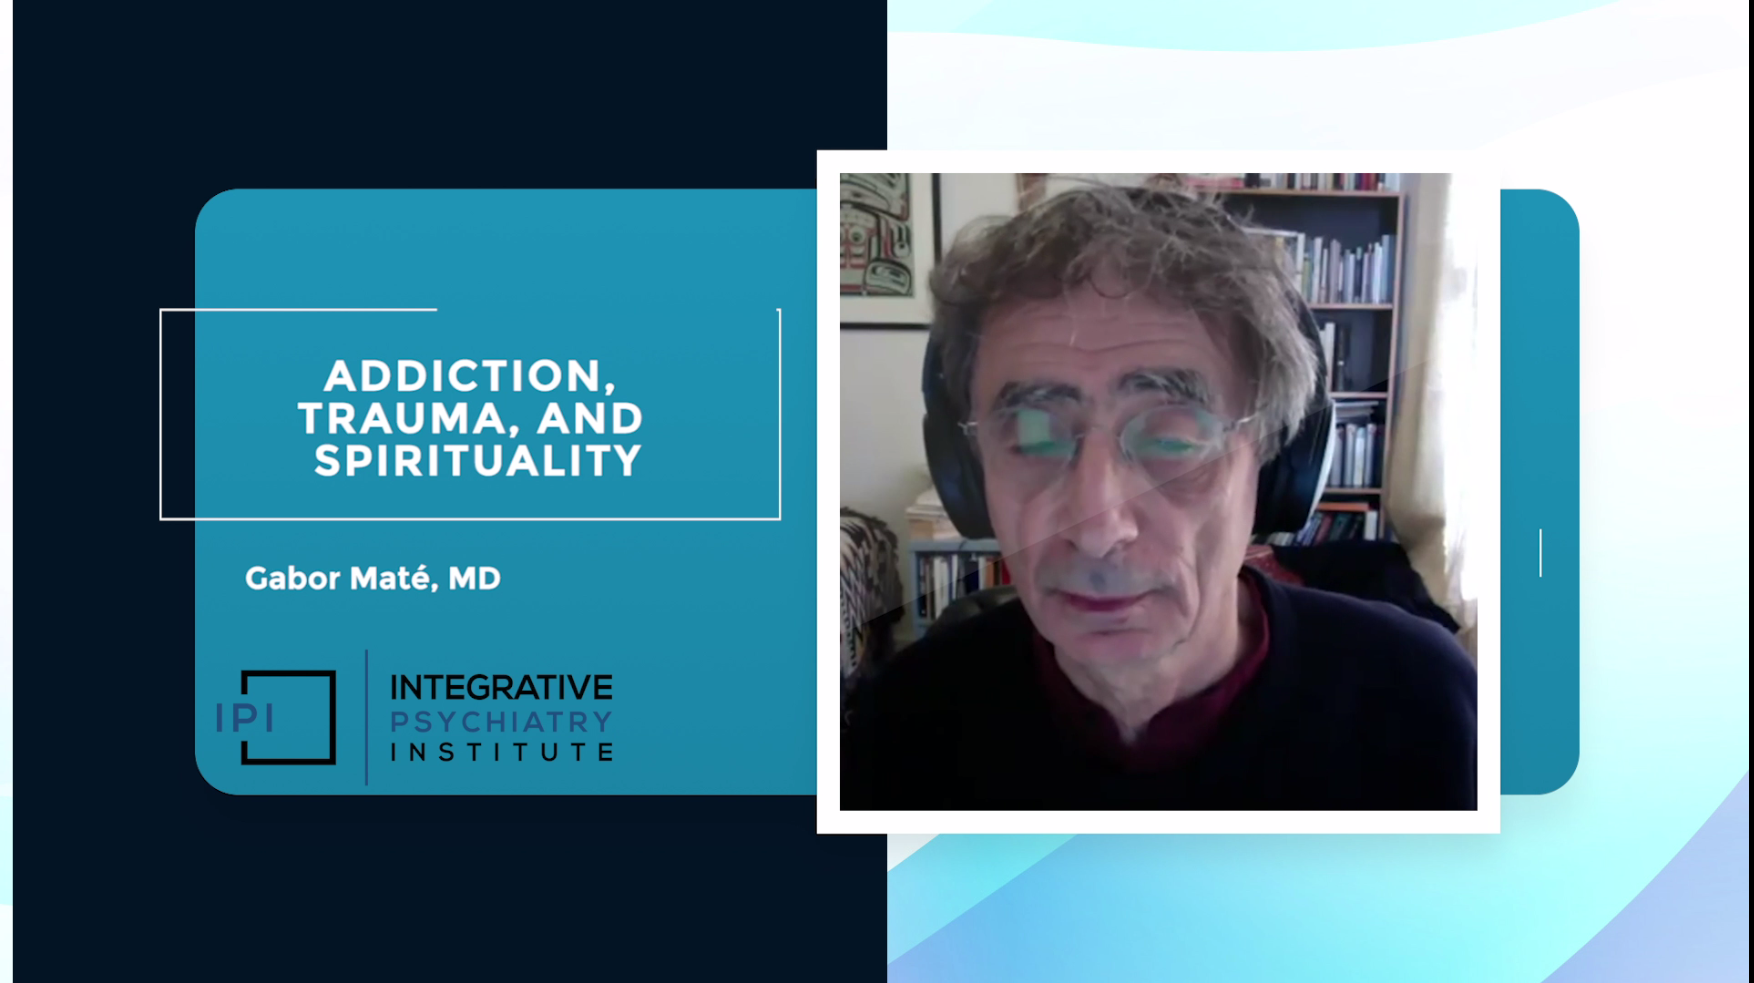 Addiction, Trauma Spirituality by MD - Psychiatry Institute